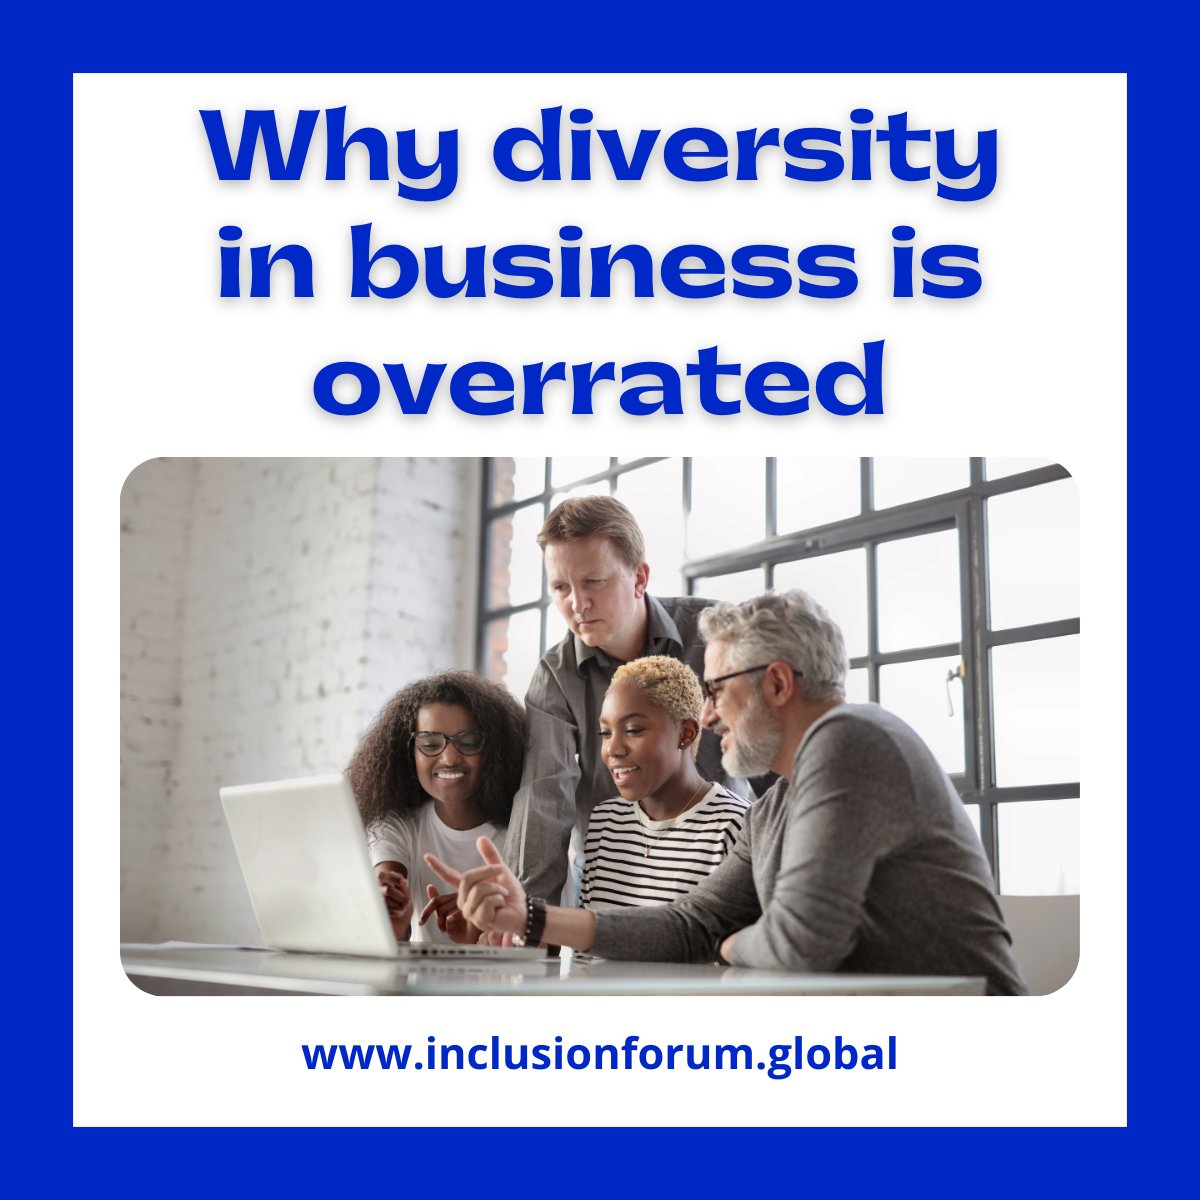 𝗪𝗵𝘆 𝗱𝗶𝘃𝗲𝗿𝘀𝗶𝘁𝘆 𝗶𝗻 𝗯𝘂𝘀𝗶𝗻𝗲𝘀𝘀 𝗶𝘀 𝗼𝘃𝗲𝗿𝗿𝗮𝘁𝗲𝗱

Link: linkedin.com/feed/update/ur…

@KGridin 

#Diversity #DEI #DiversityandInclusion #Inclusion #InclusiveWorkplace #DiverseEmployees #DiverseWorkforce #WorkforceDiversity #DiversityinBusiness